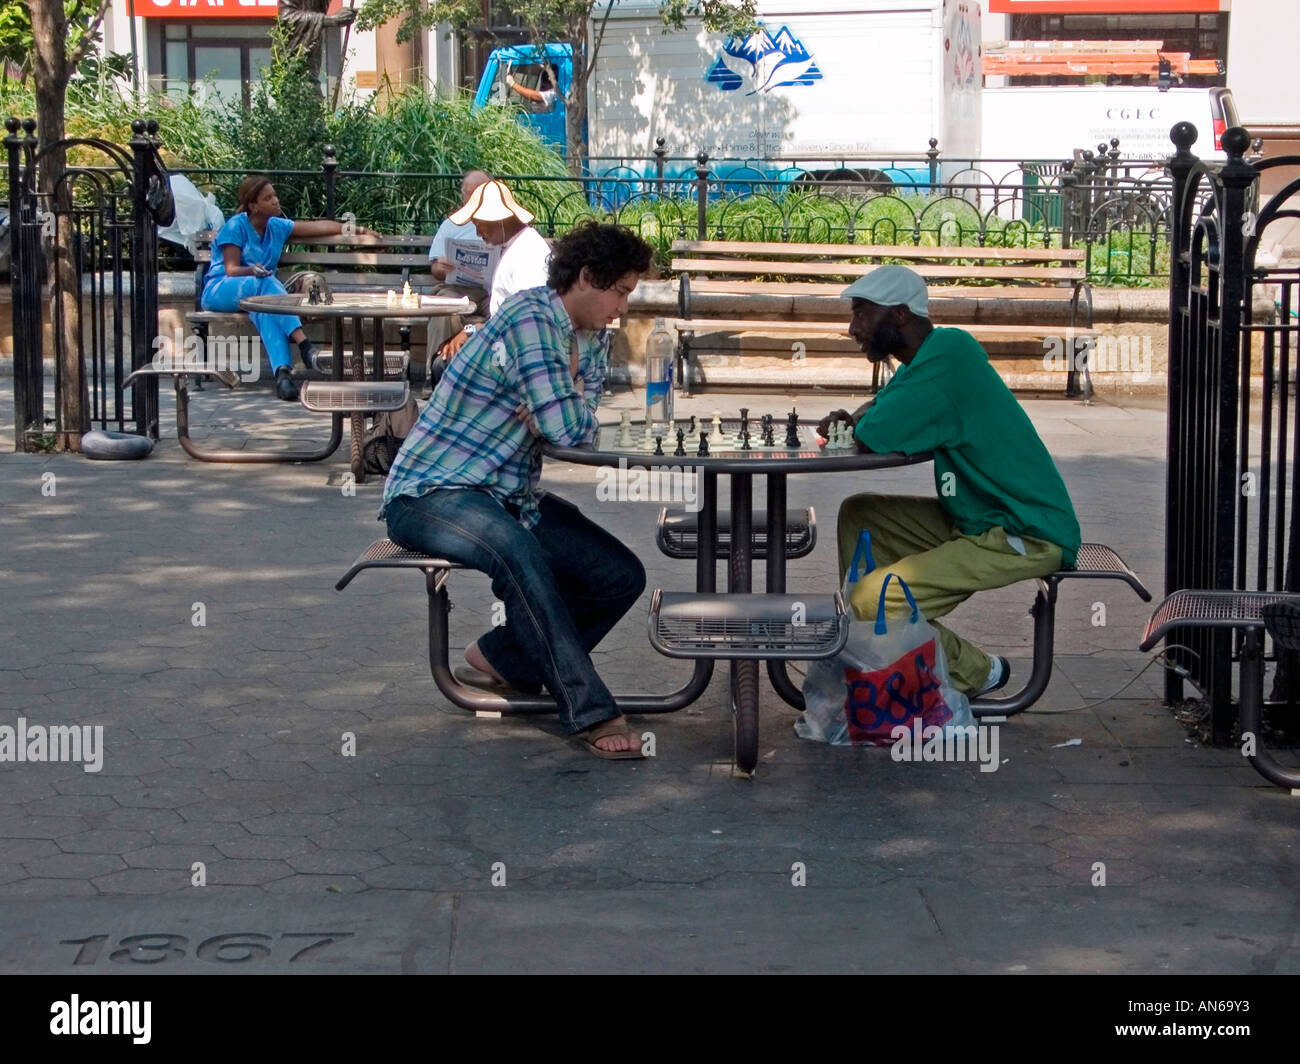 Avid chess players in Bryant Park midtown Manhattan, NYC Stock Photo - Alamy